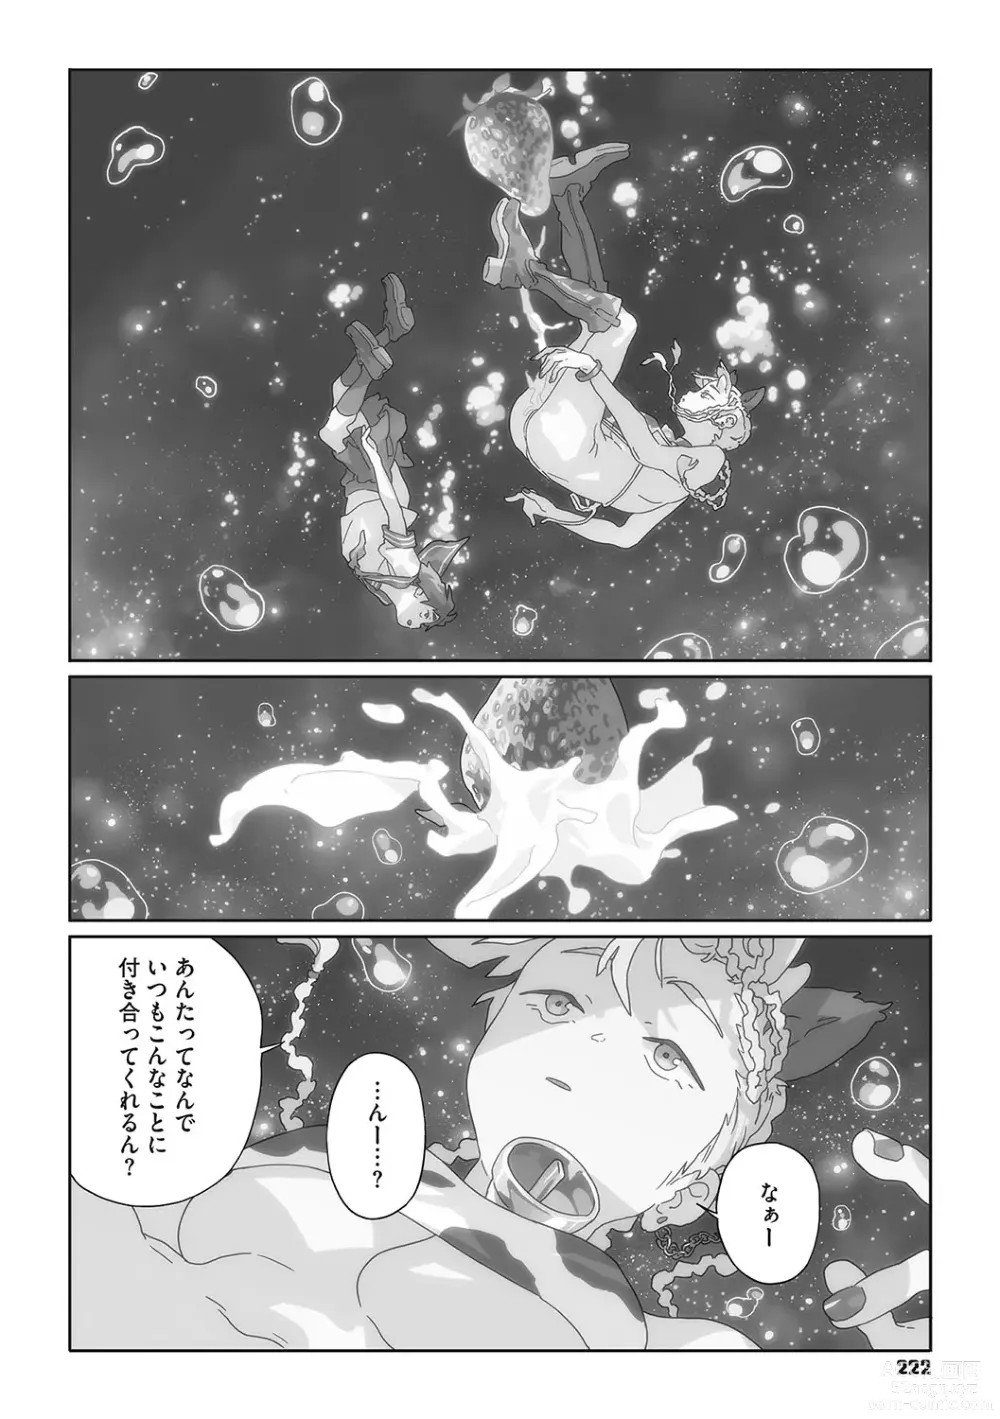 Page 221 of manga Ito o Yoru